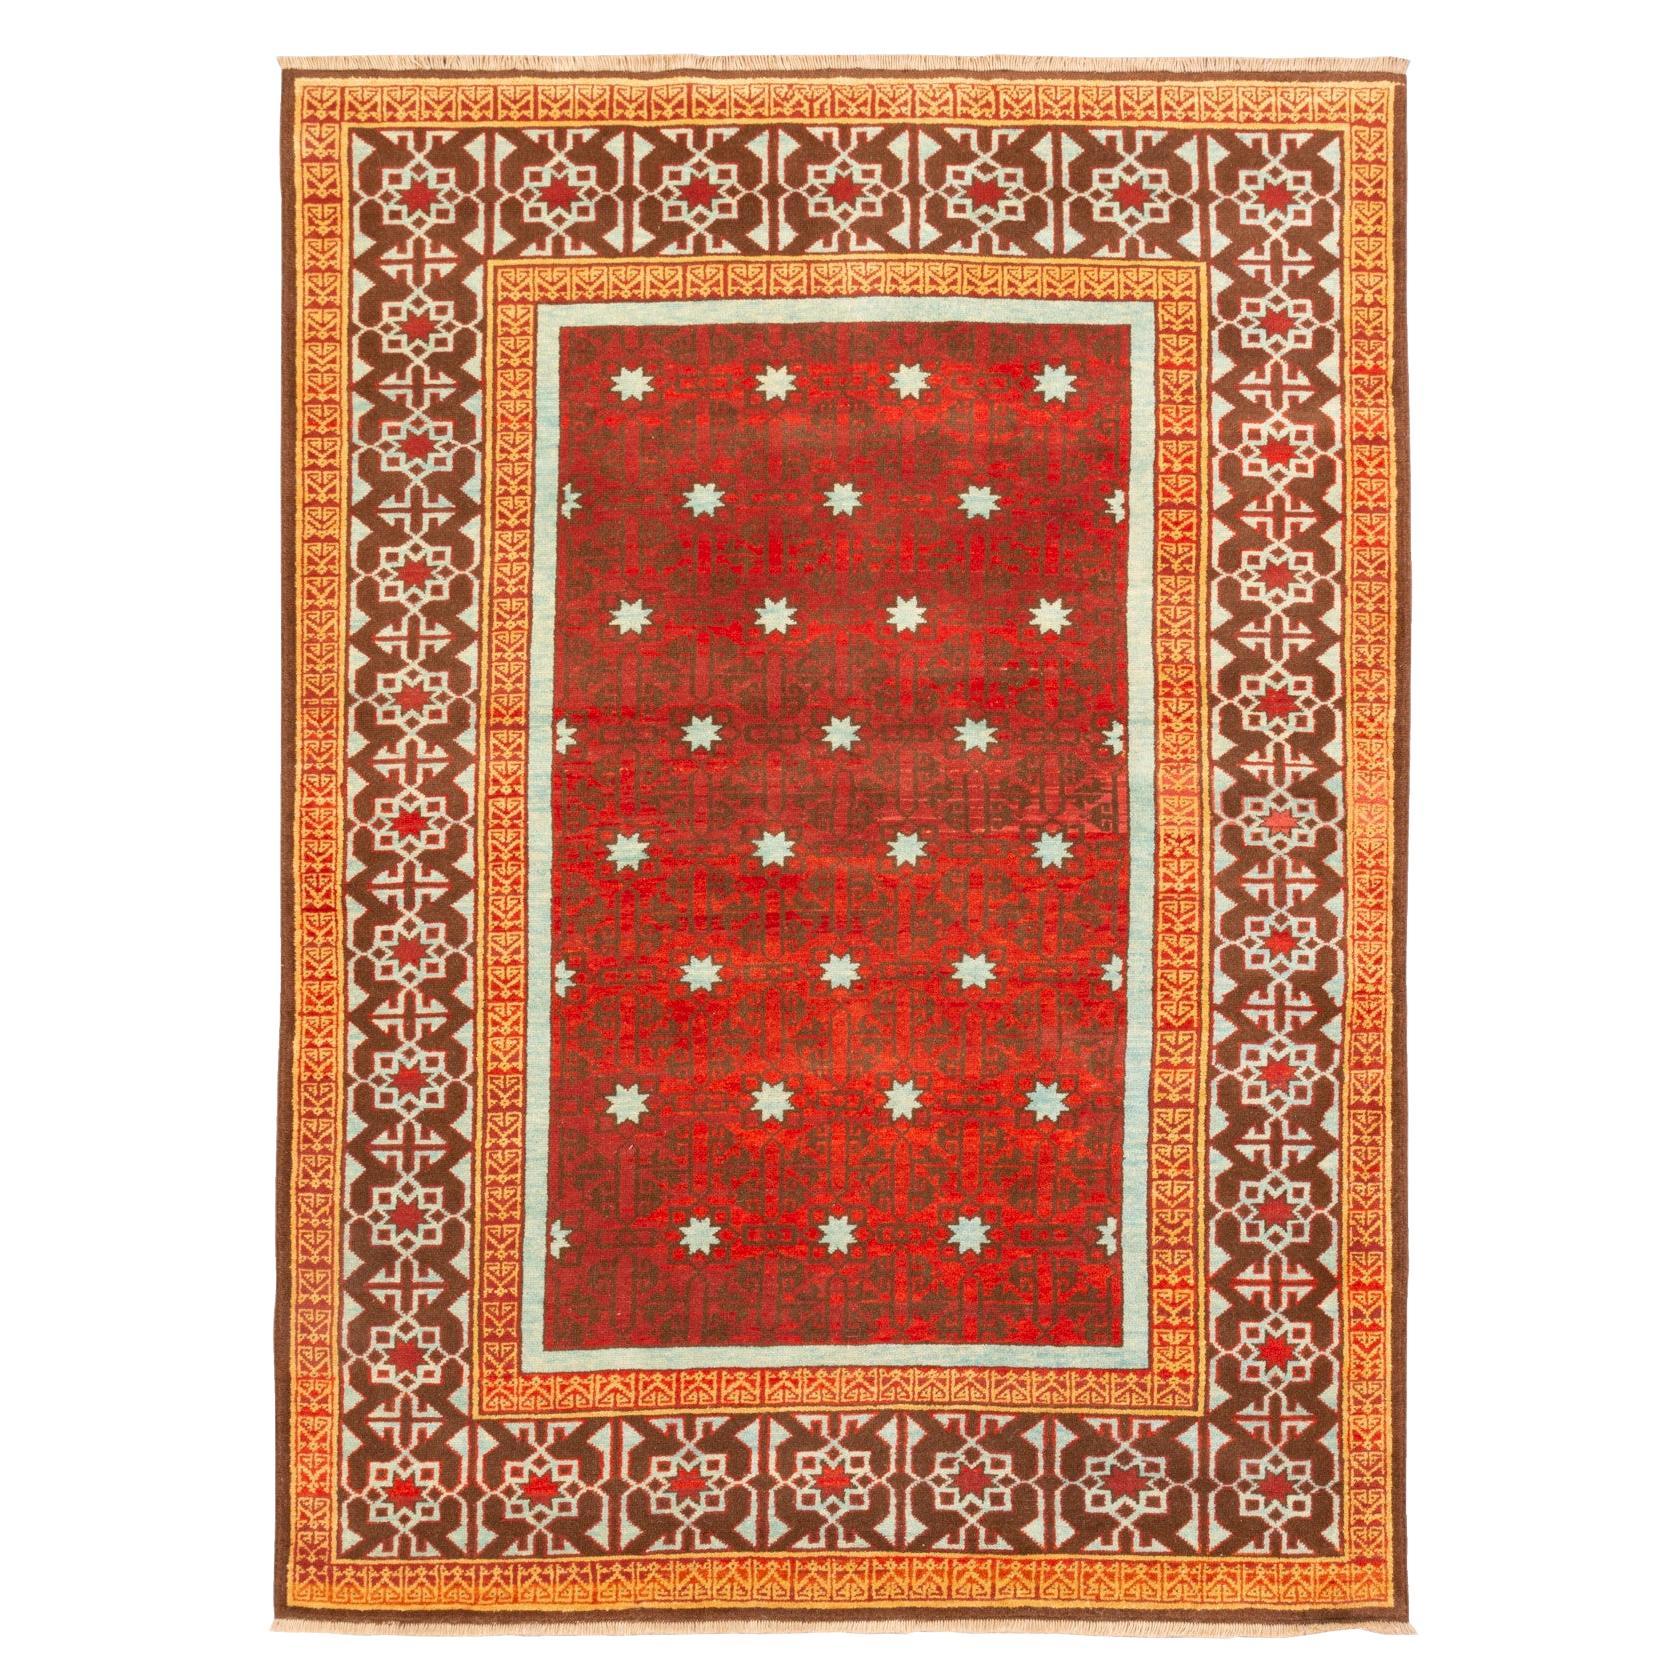 Ararat Rugs the Alaeddin Mosque Flowers and Stars Lattice Carpet, Natural Dyed